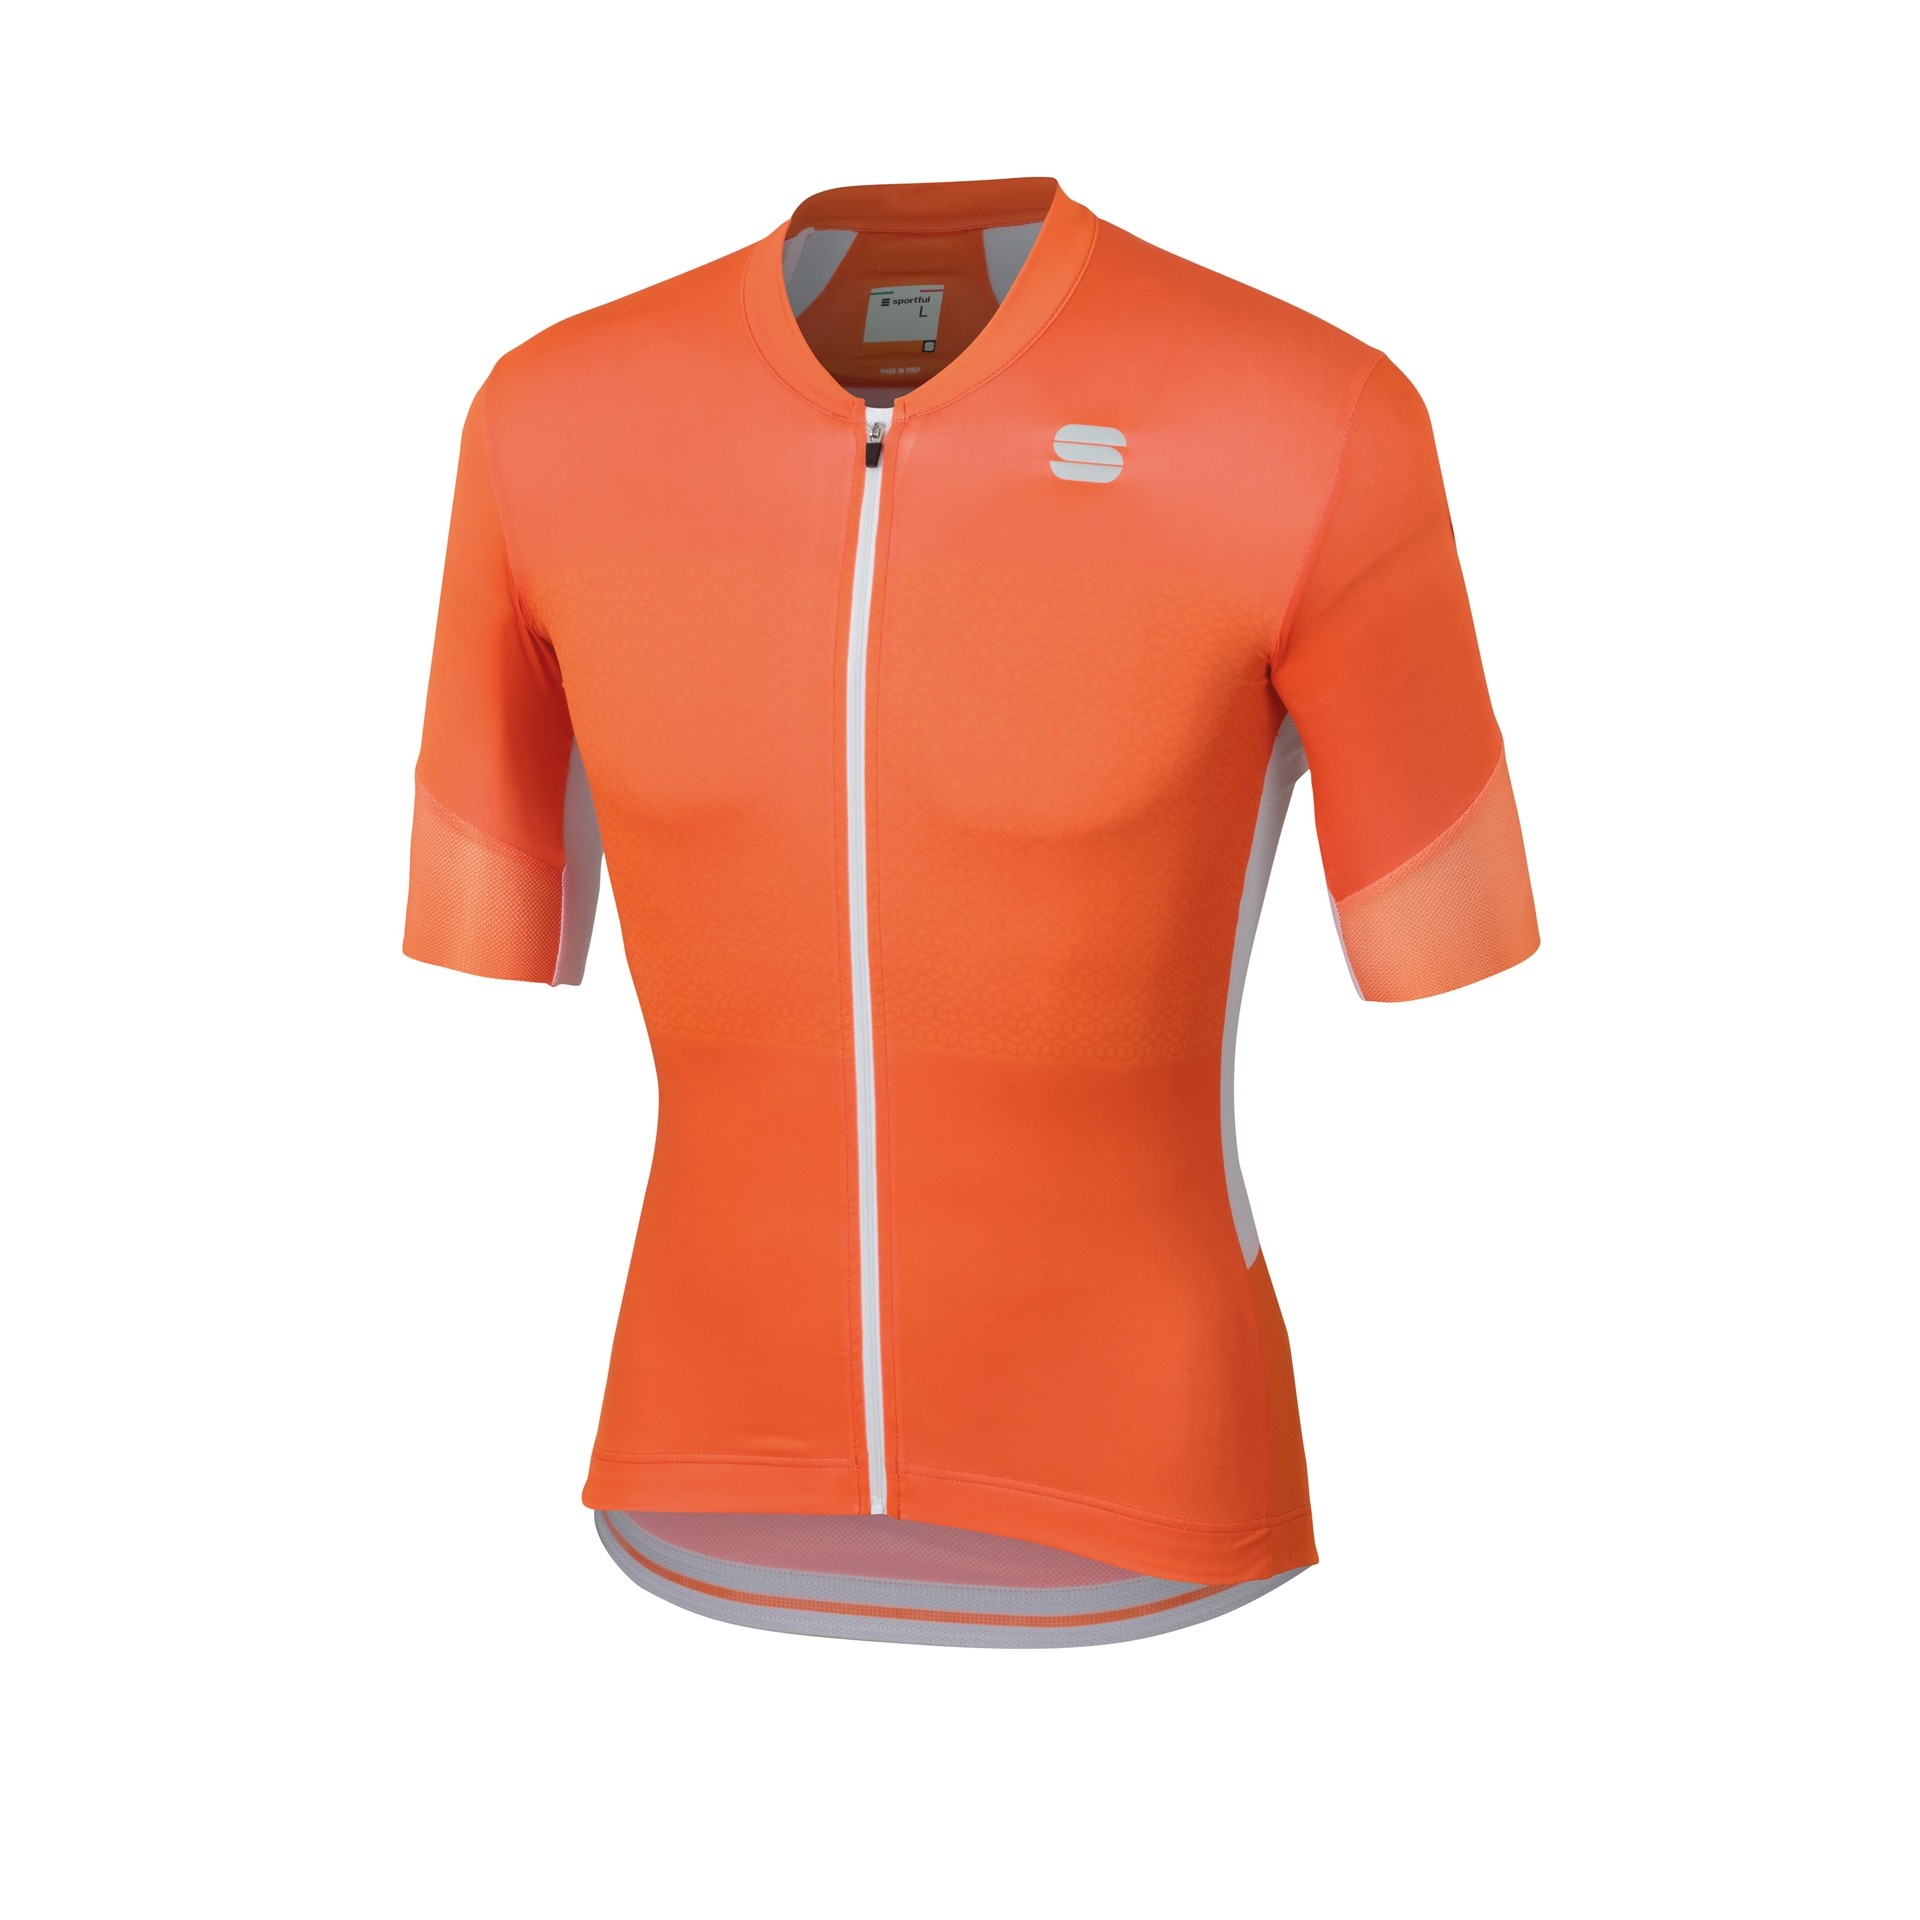 Sportful gts maillot de cyclisme manches courtes orange sdr orange clair blanc